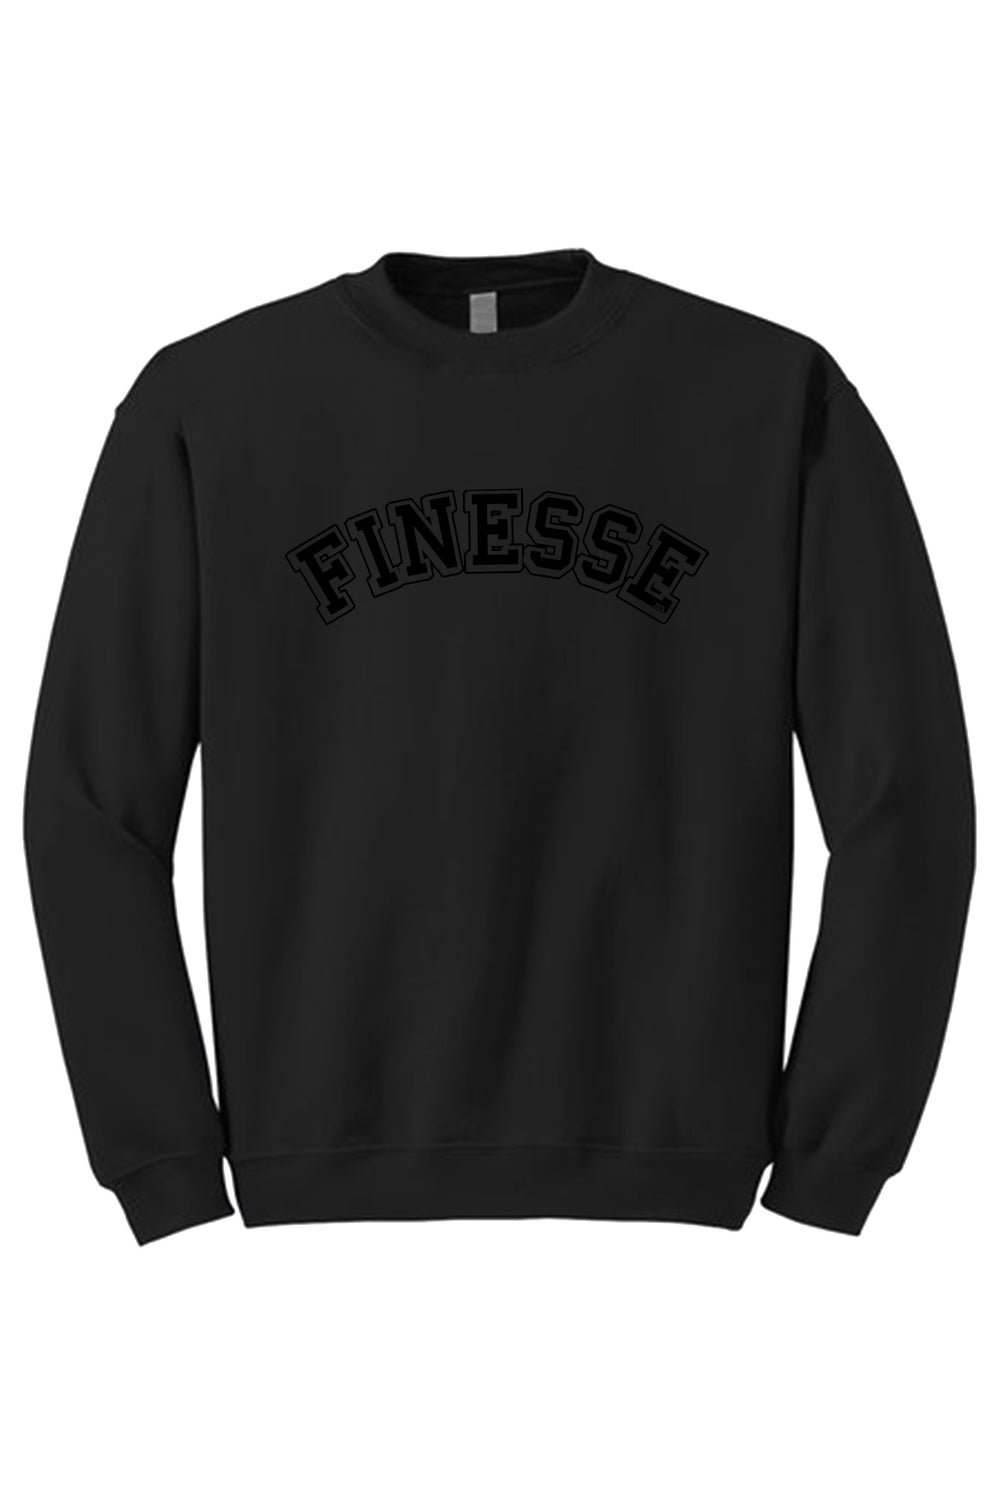 Finesse Crewneck Sweatshirt (Black Logo) - Zamage